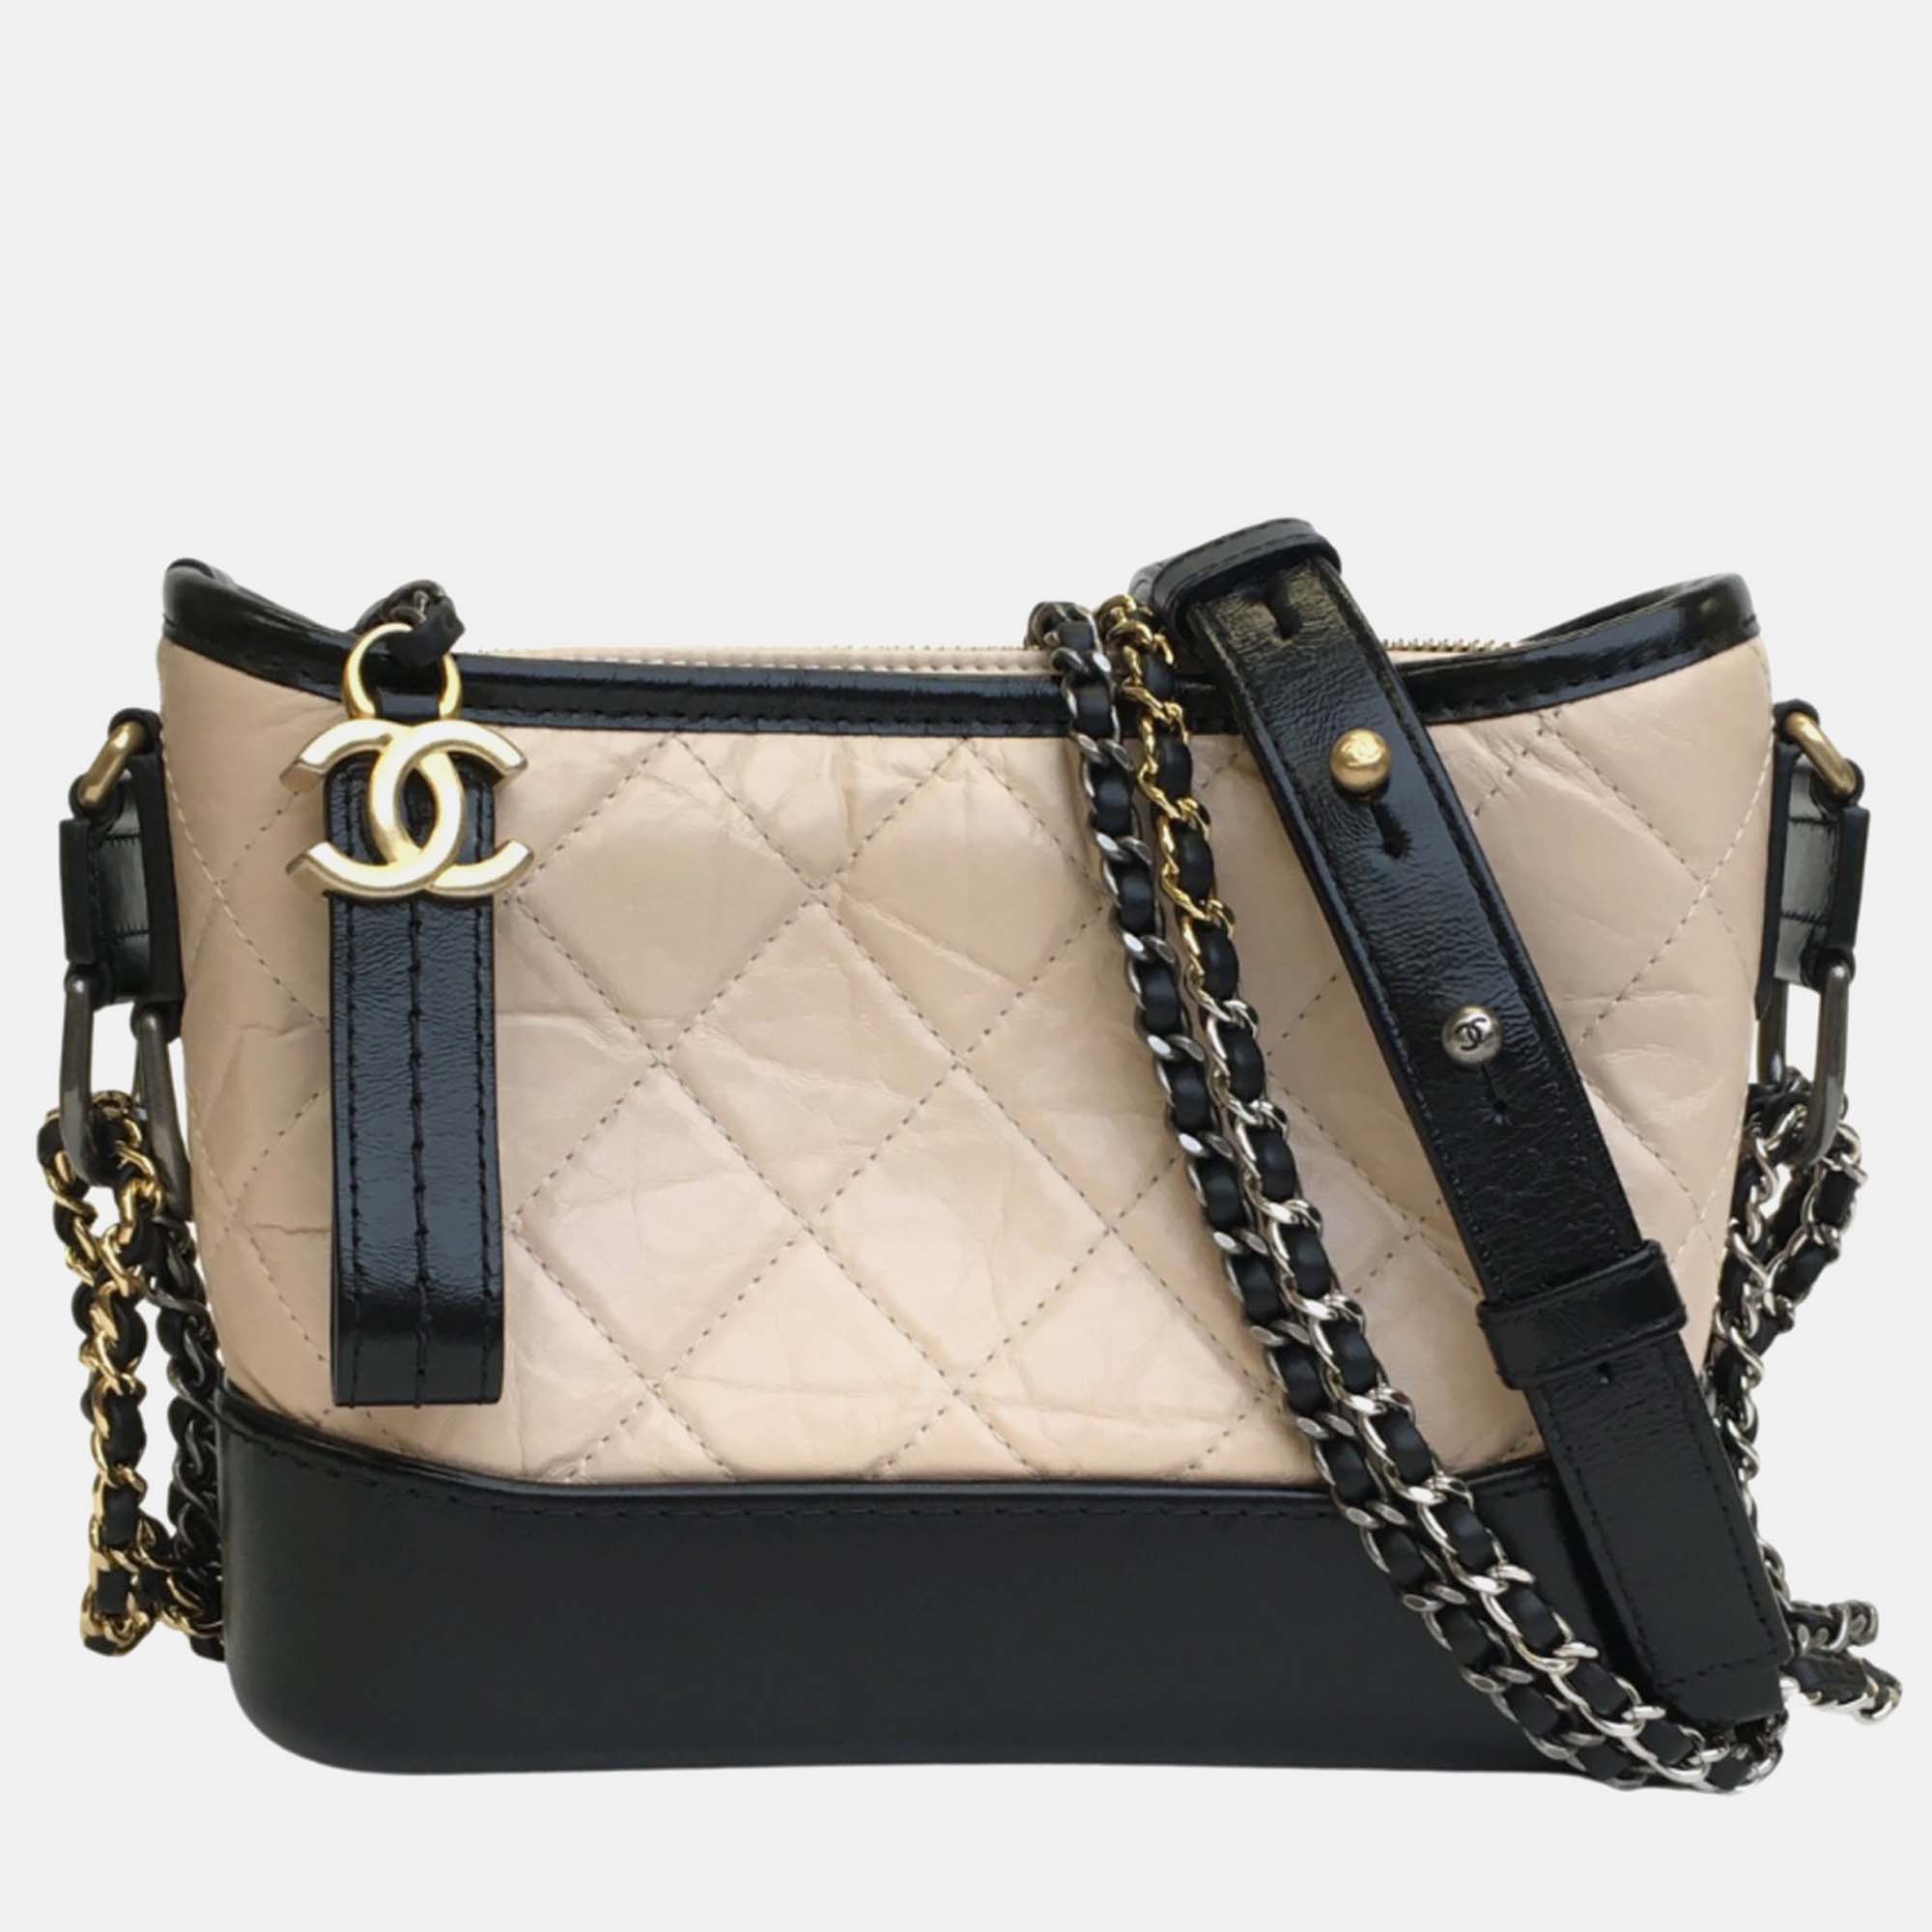 Chanel beige/black leather small gabrielle shoulder bag